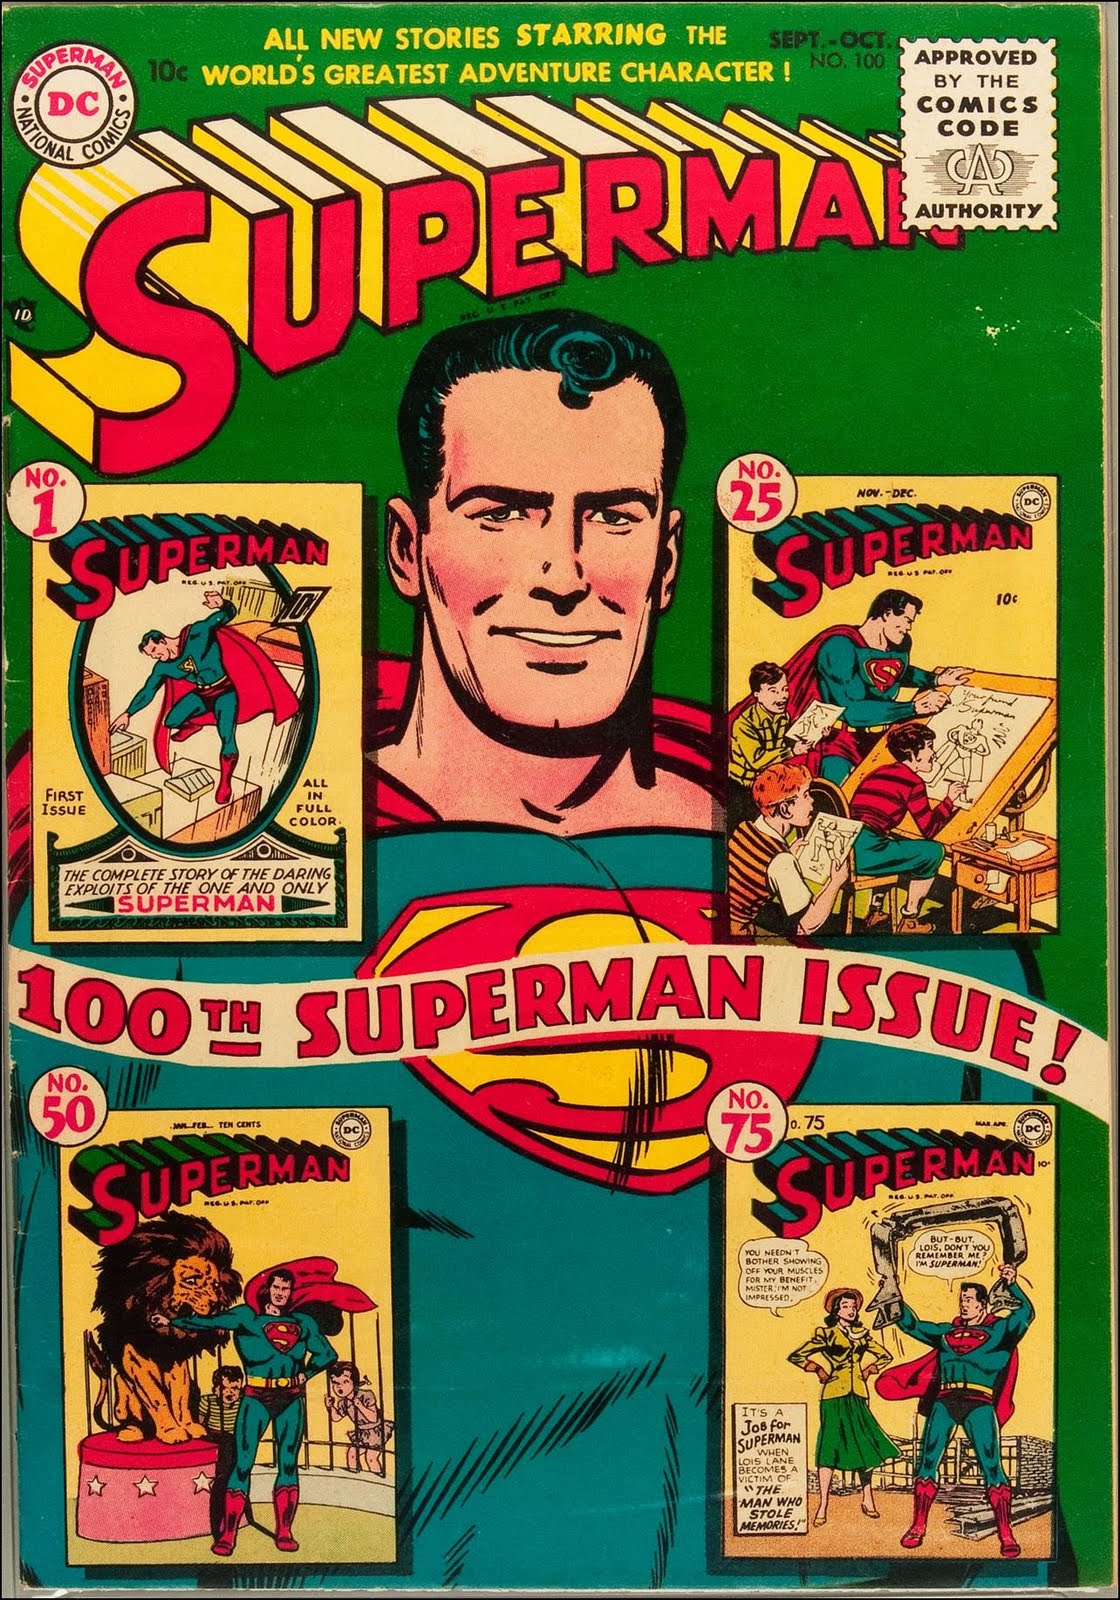 superman100.jpg